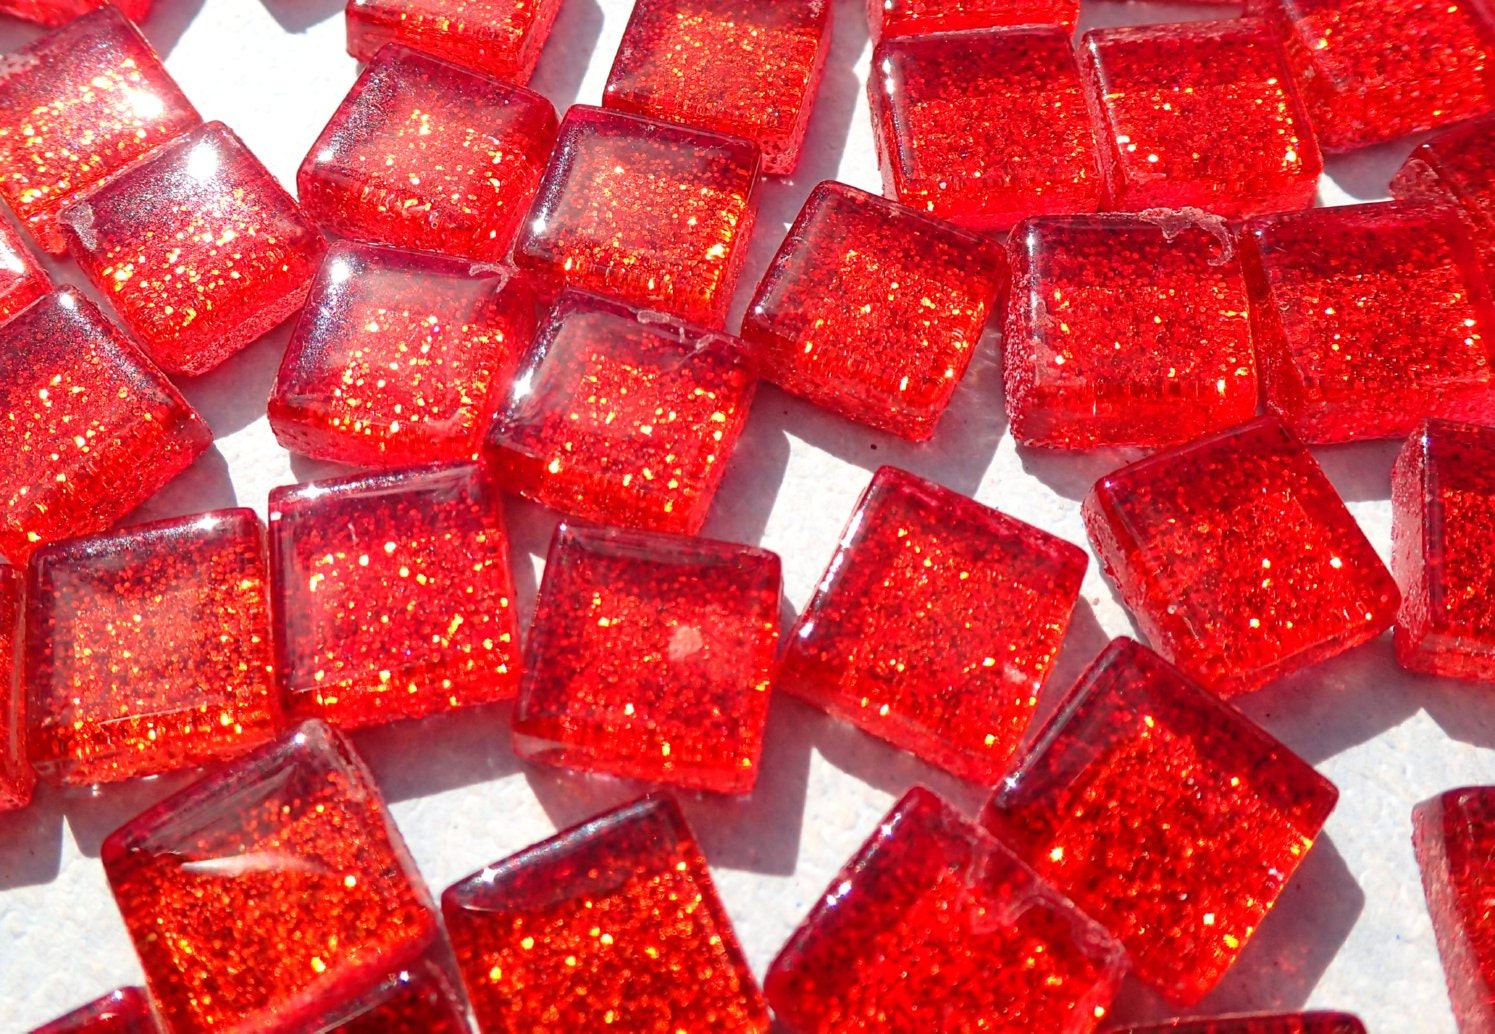 Red Glitter Tiles - 1 cm - 100g - Over 100 Metallic Glass Tiles - Candy Apple Red